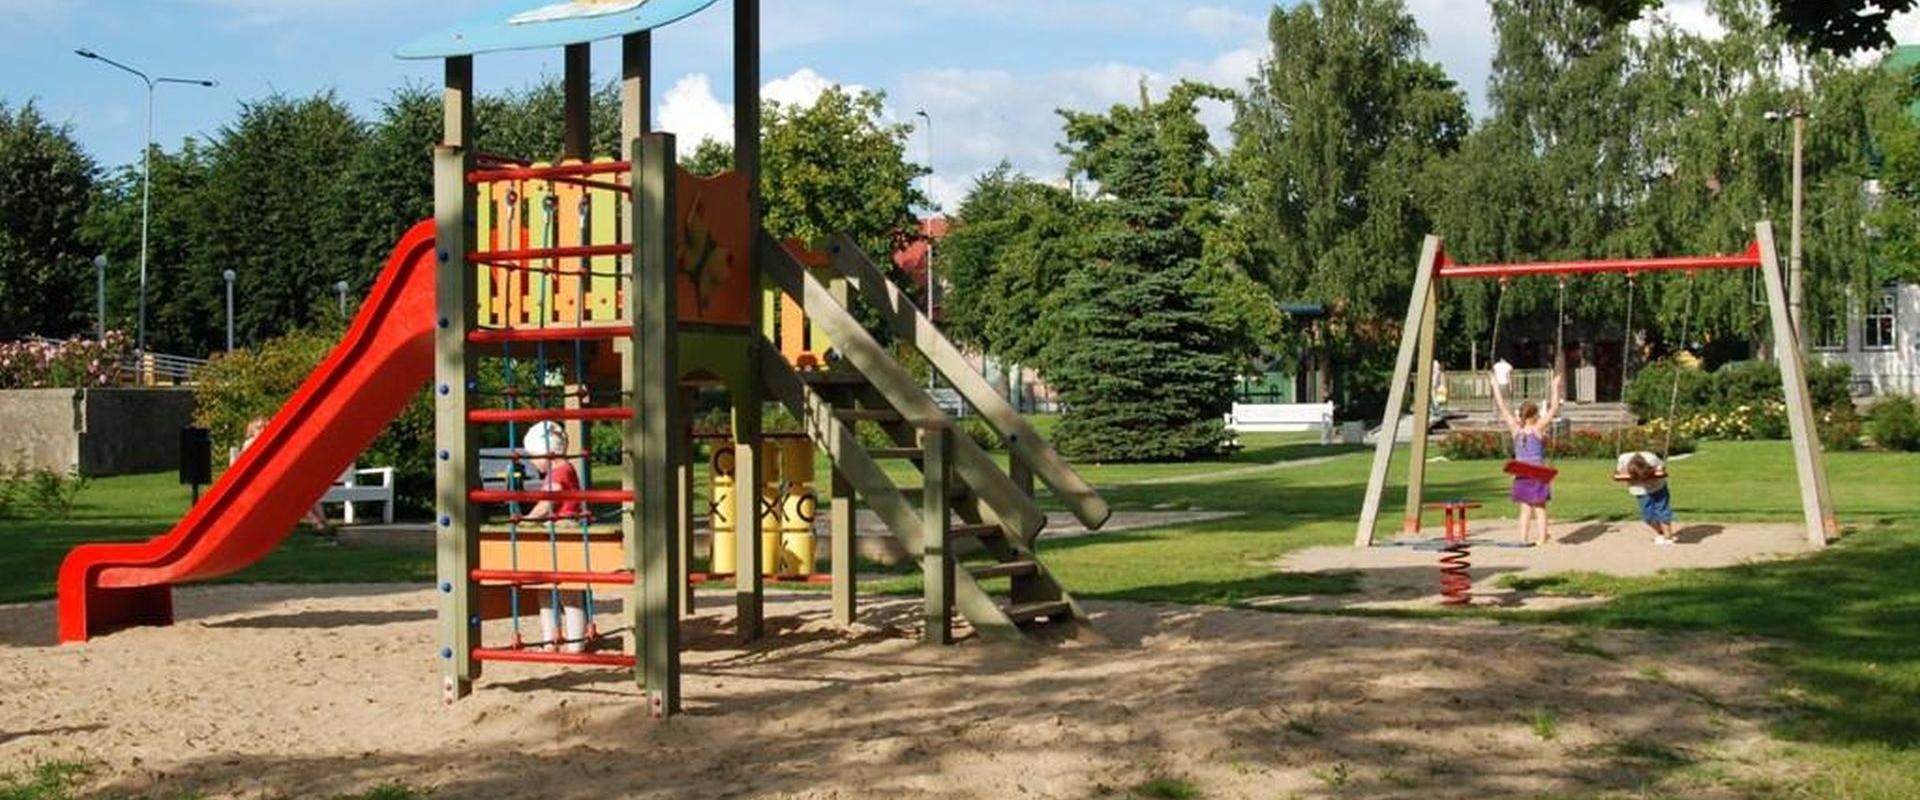 Children’s playground on Posti Street in Haapsalu.